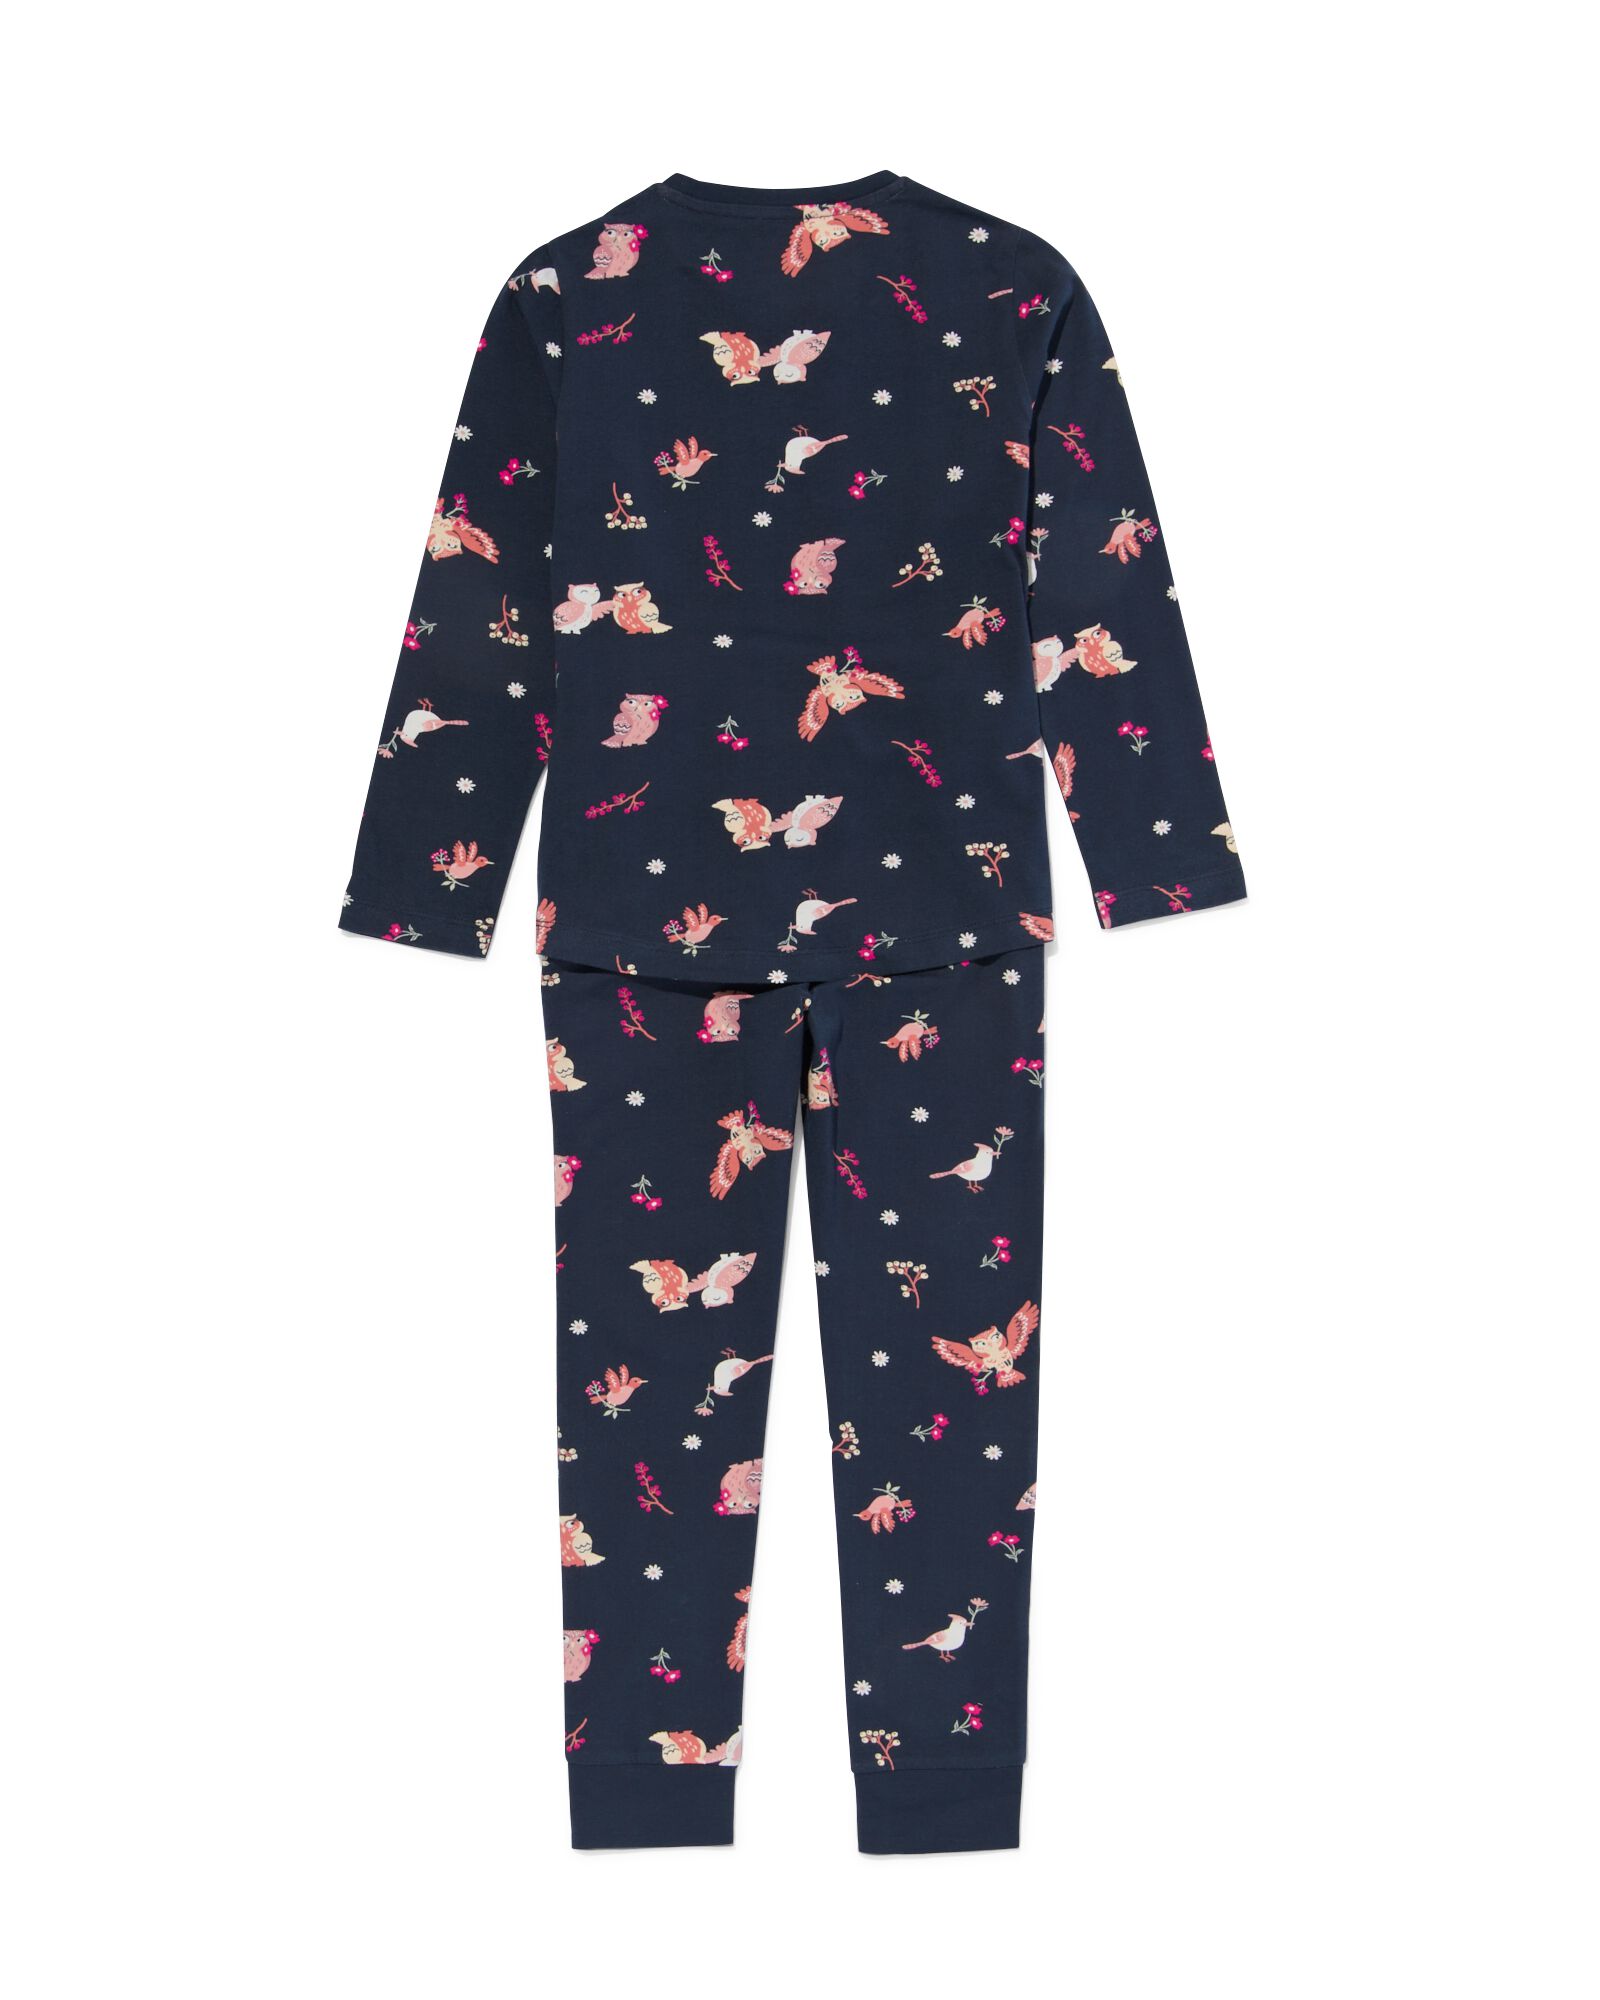 Kinder-Pyjama, Vögel dunkelblau dunkelblau - 23010780DARKBLUE - HEMA